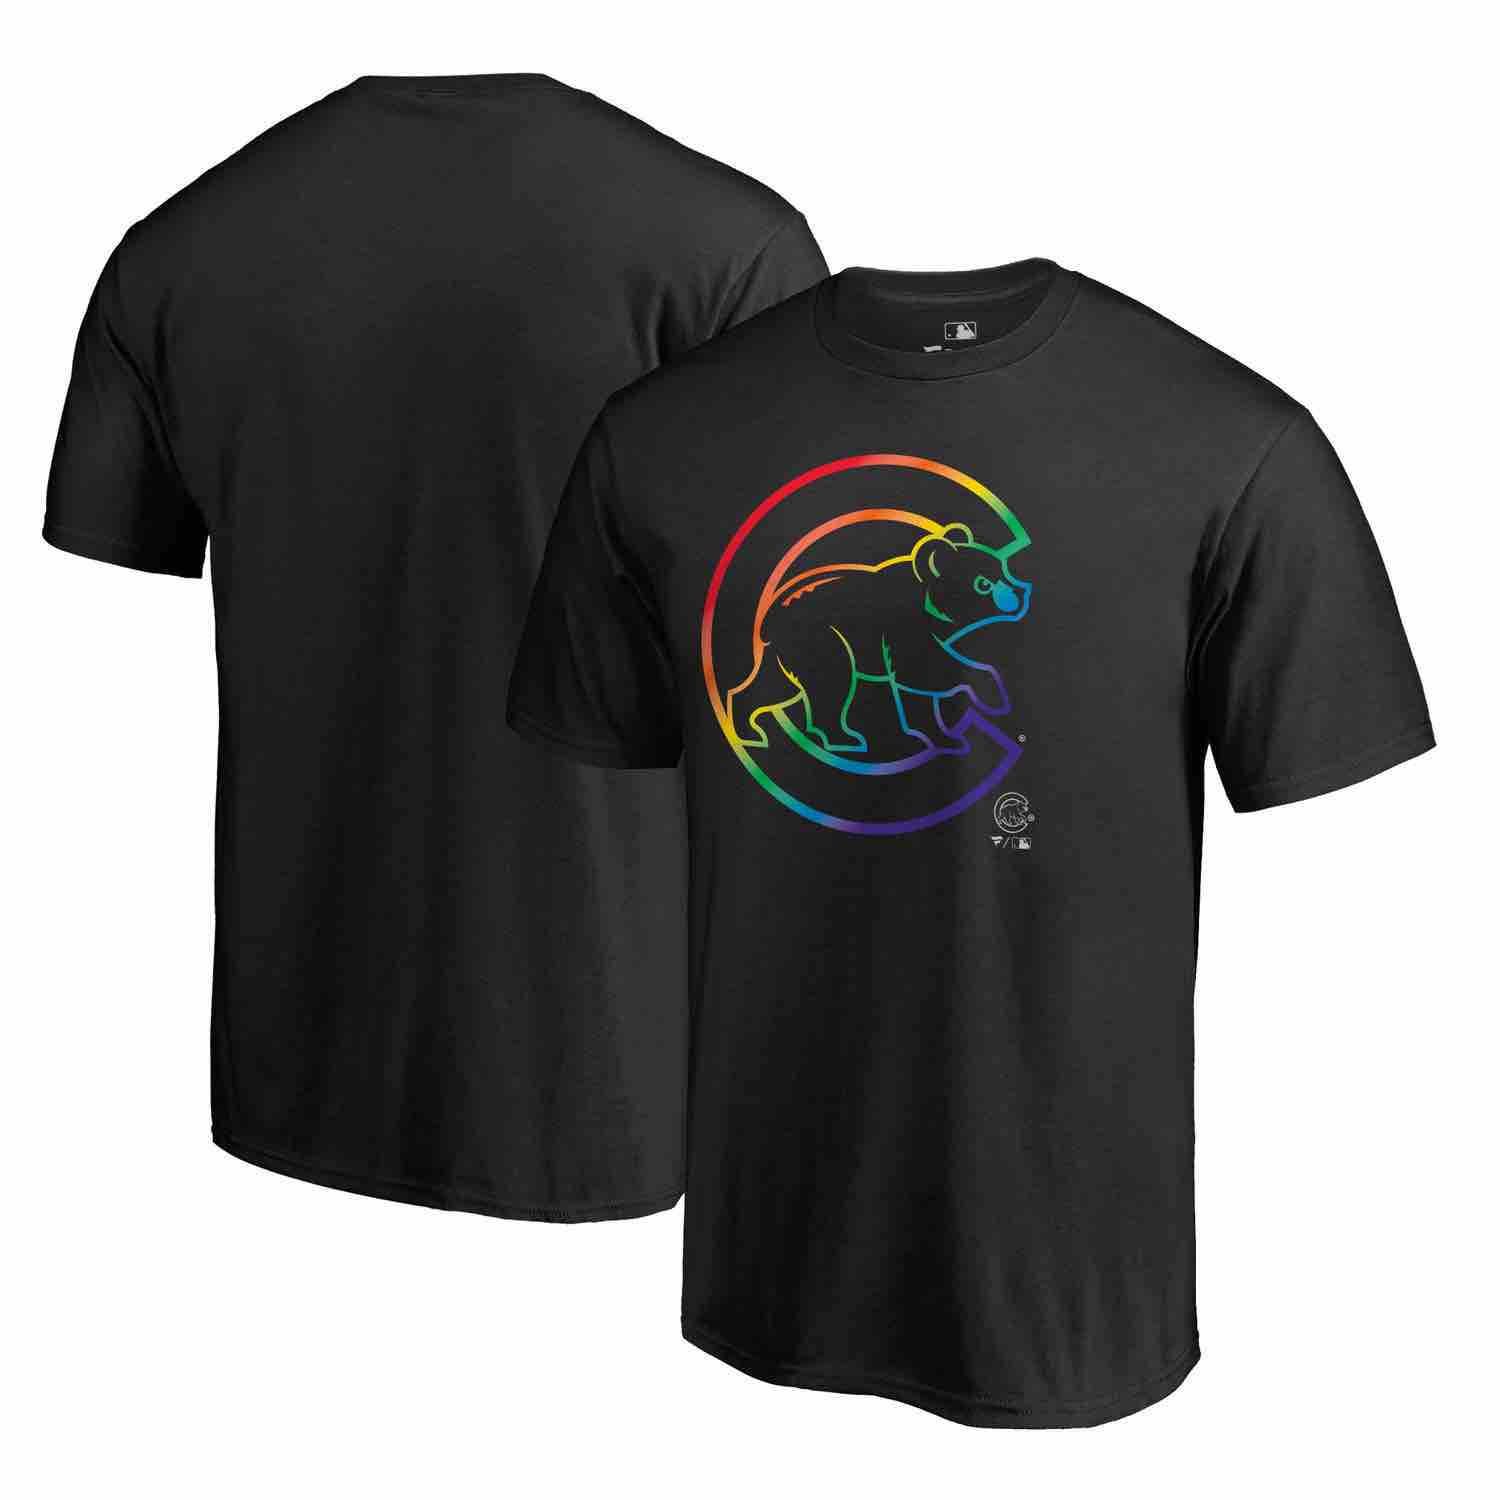 Mens Chicago Cubs Fanatics Branded Pride Black T-Shirt